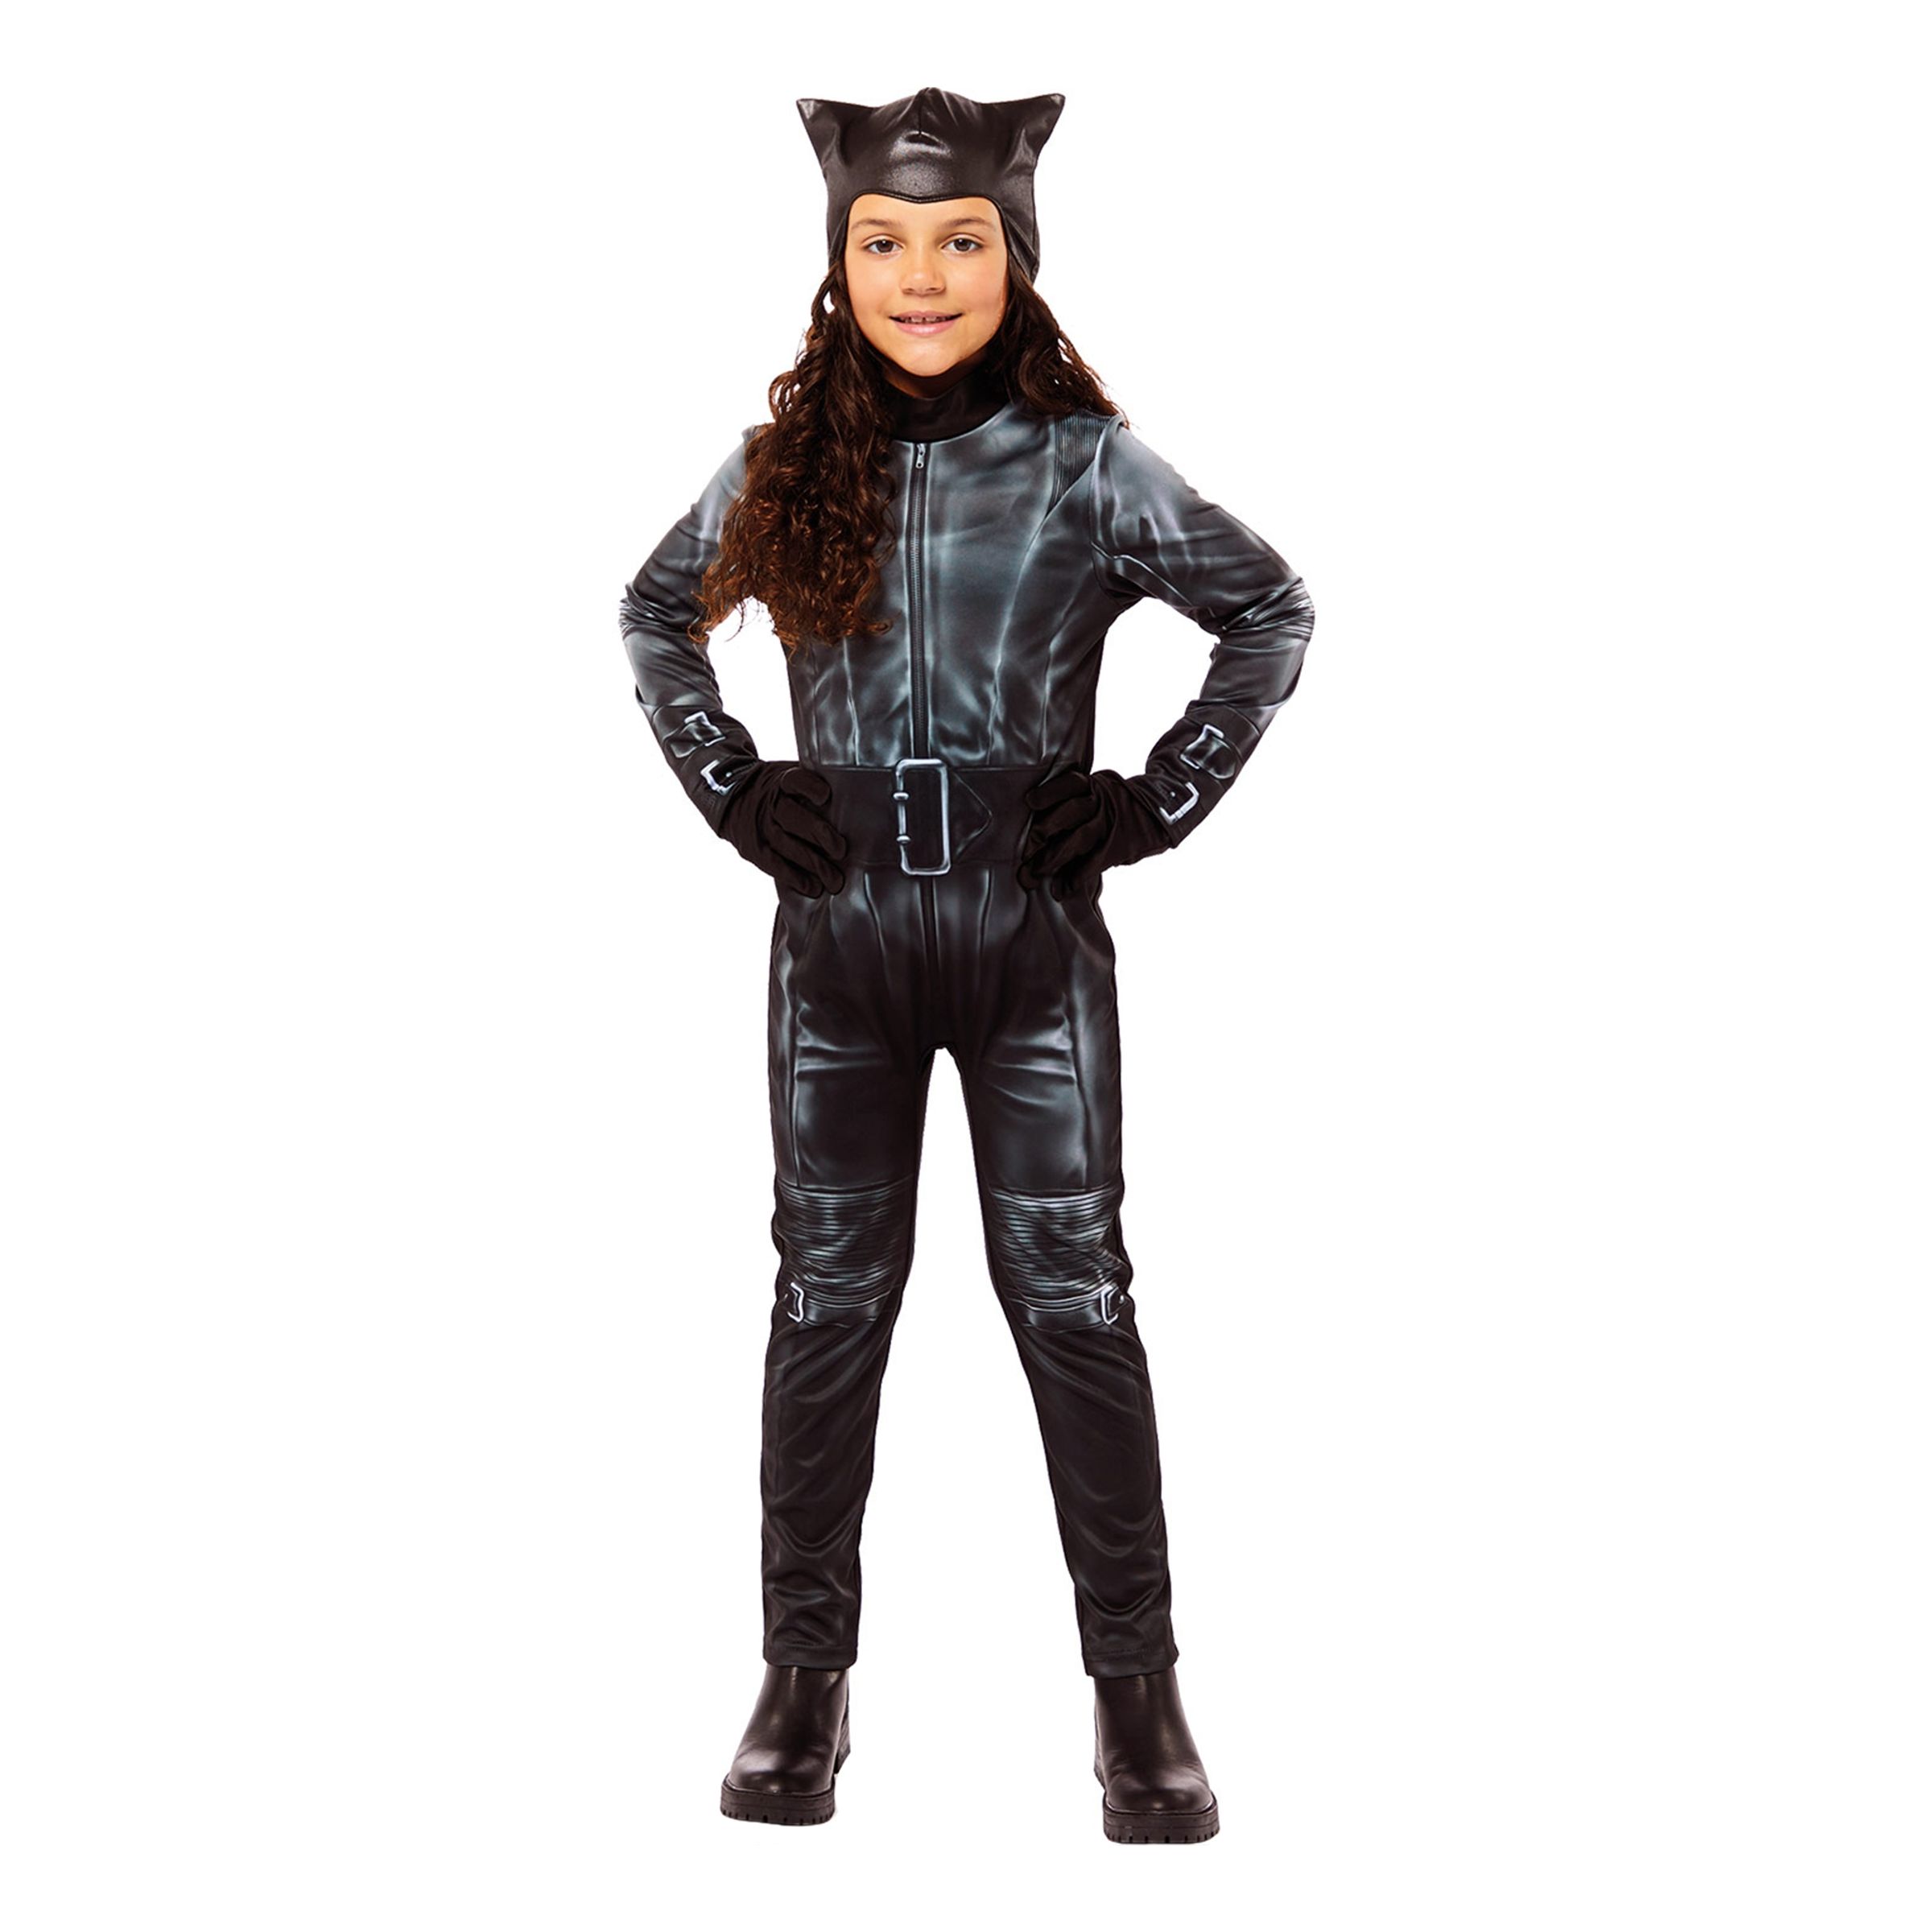 Catwoman The Movie Barn Maskeraddräkt - Large